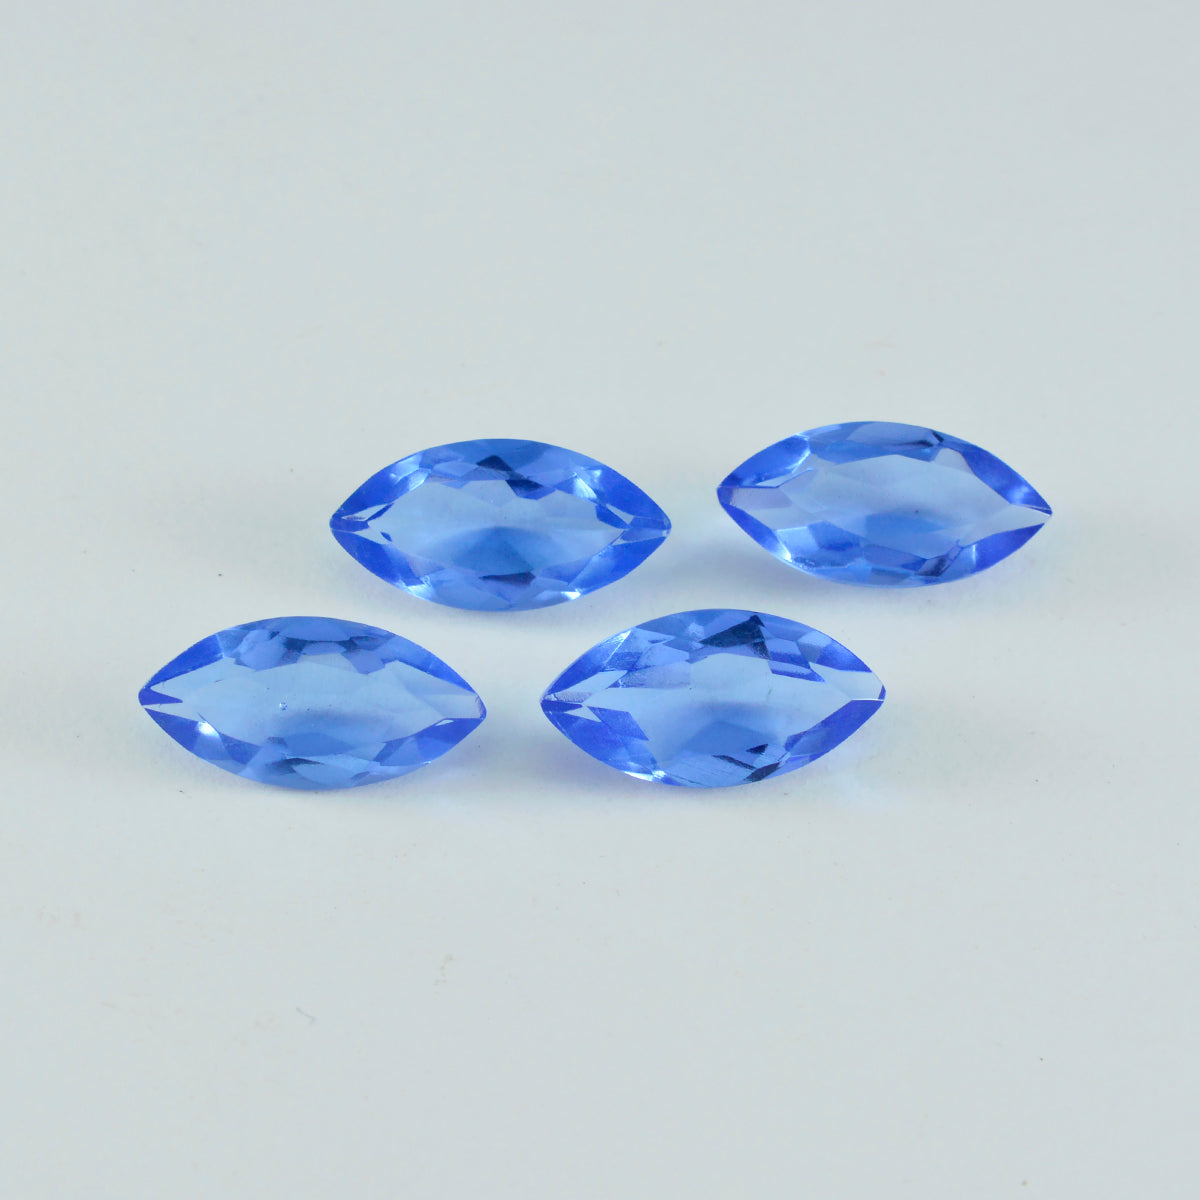 Riyogems 1PC Blue Sapphire CZ Faceted 10x20 mm Marquise Shape A Quality Loose Gem